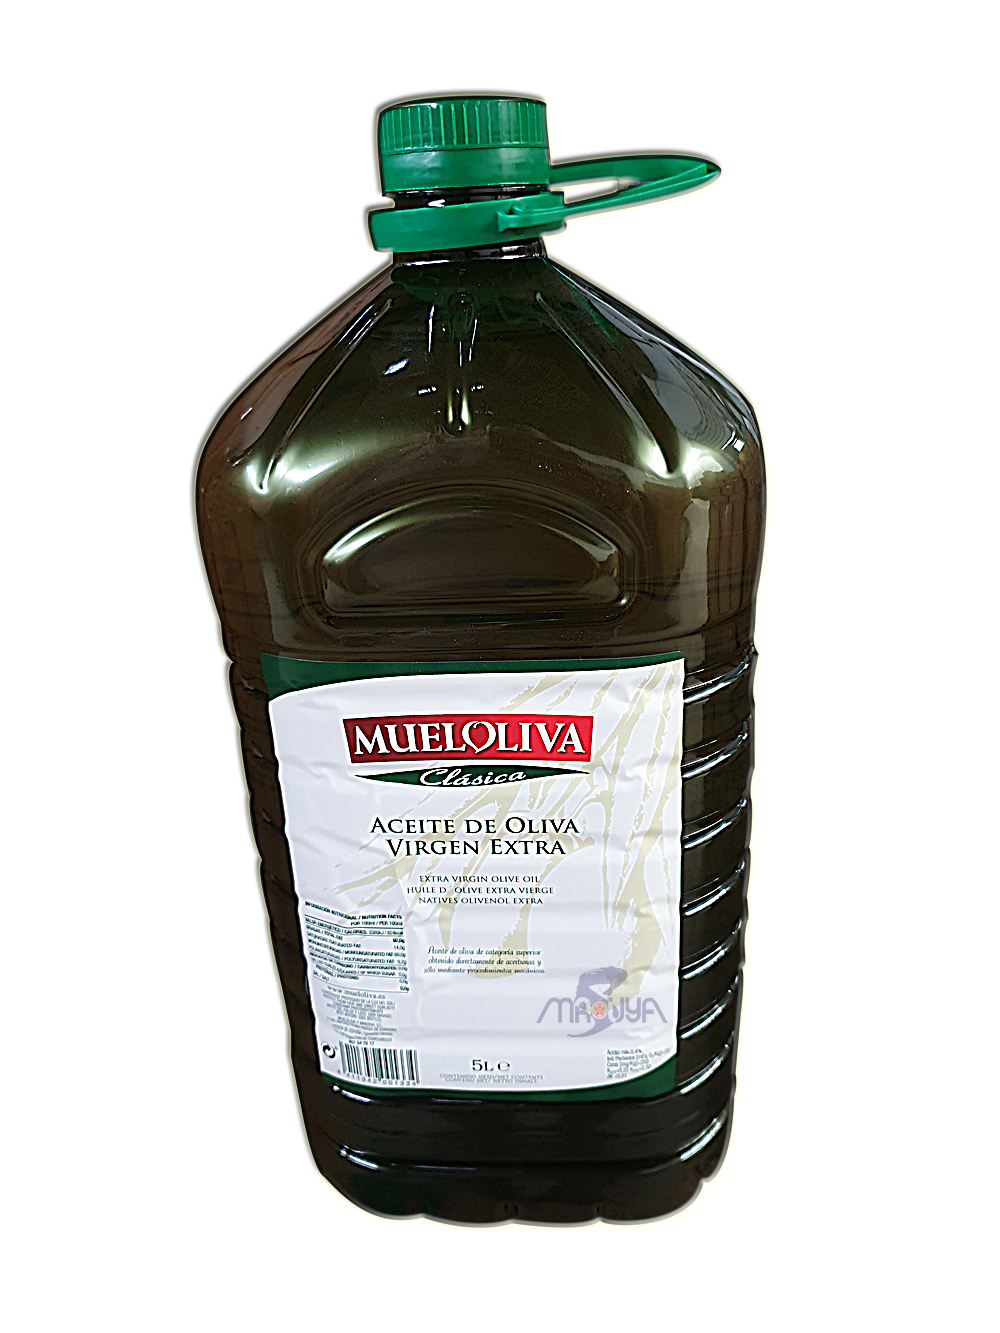 Mueloliva Extra Virgin Olive Oil PET 5 Ltr